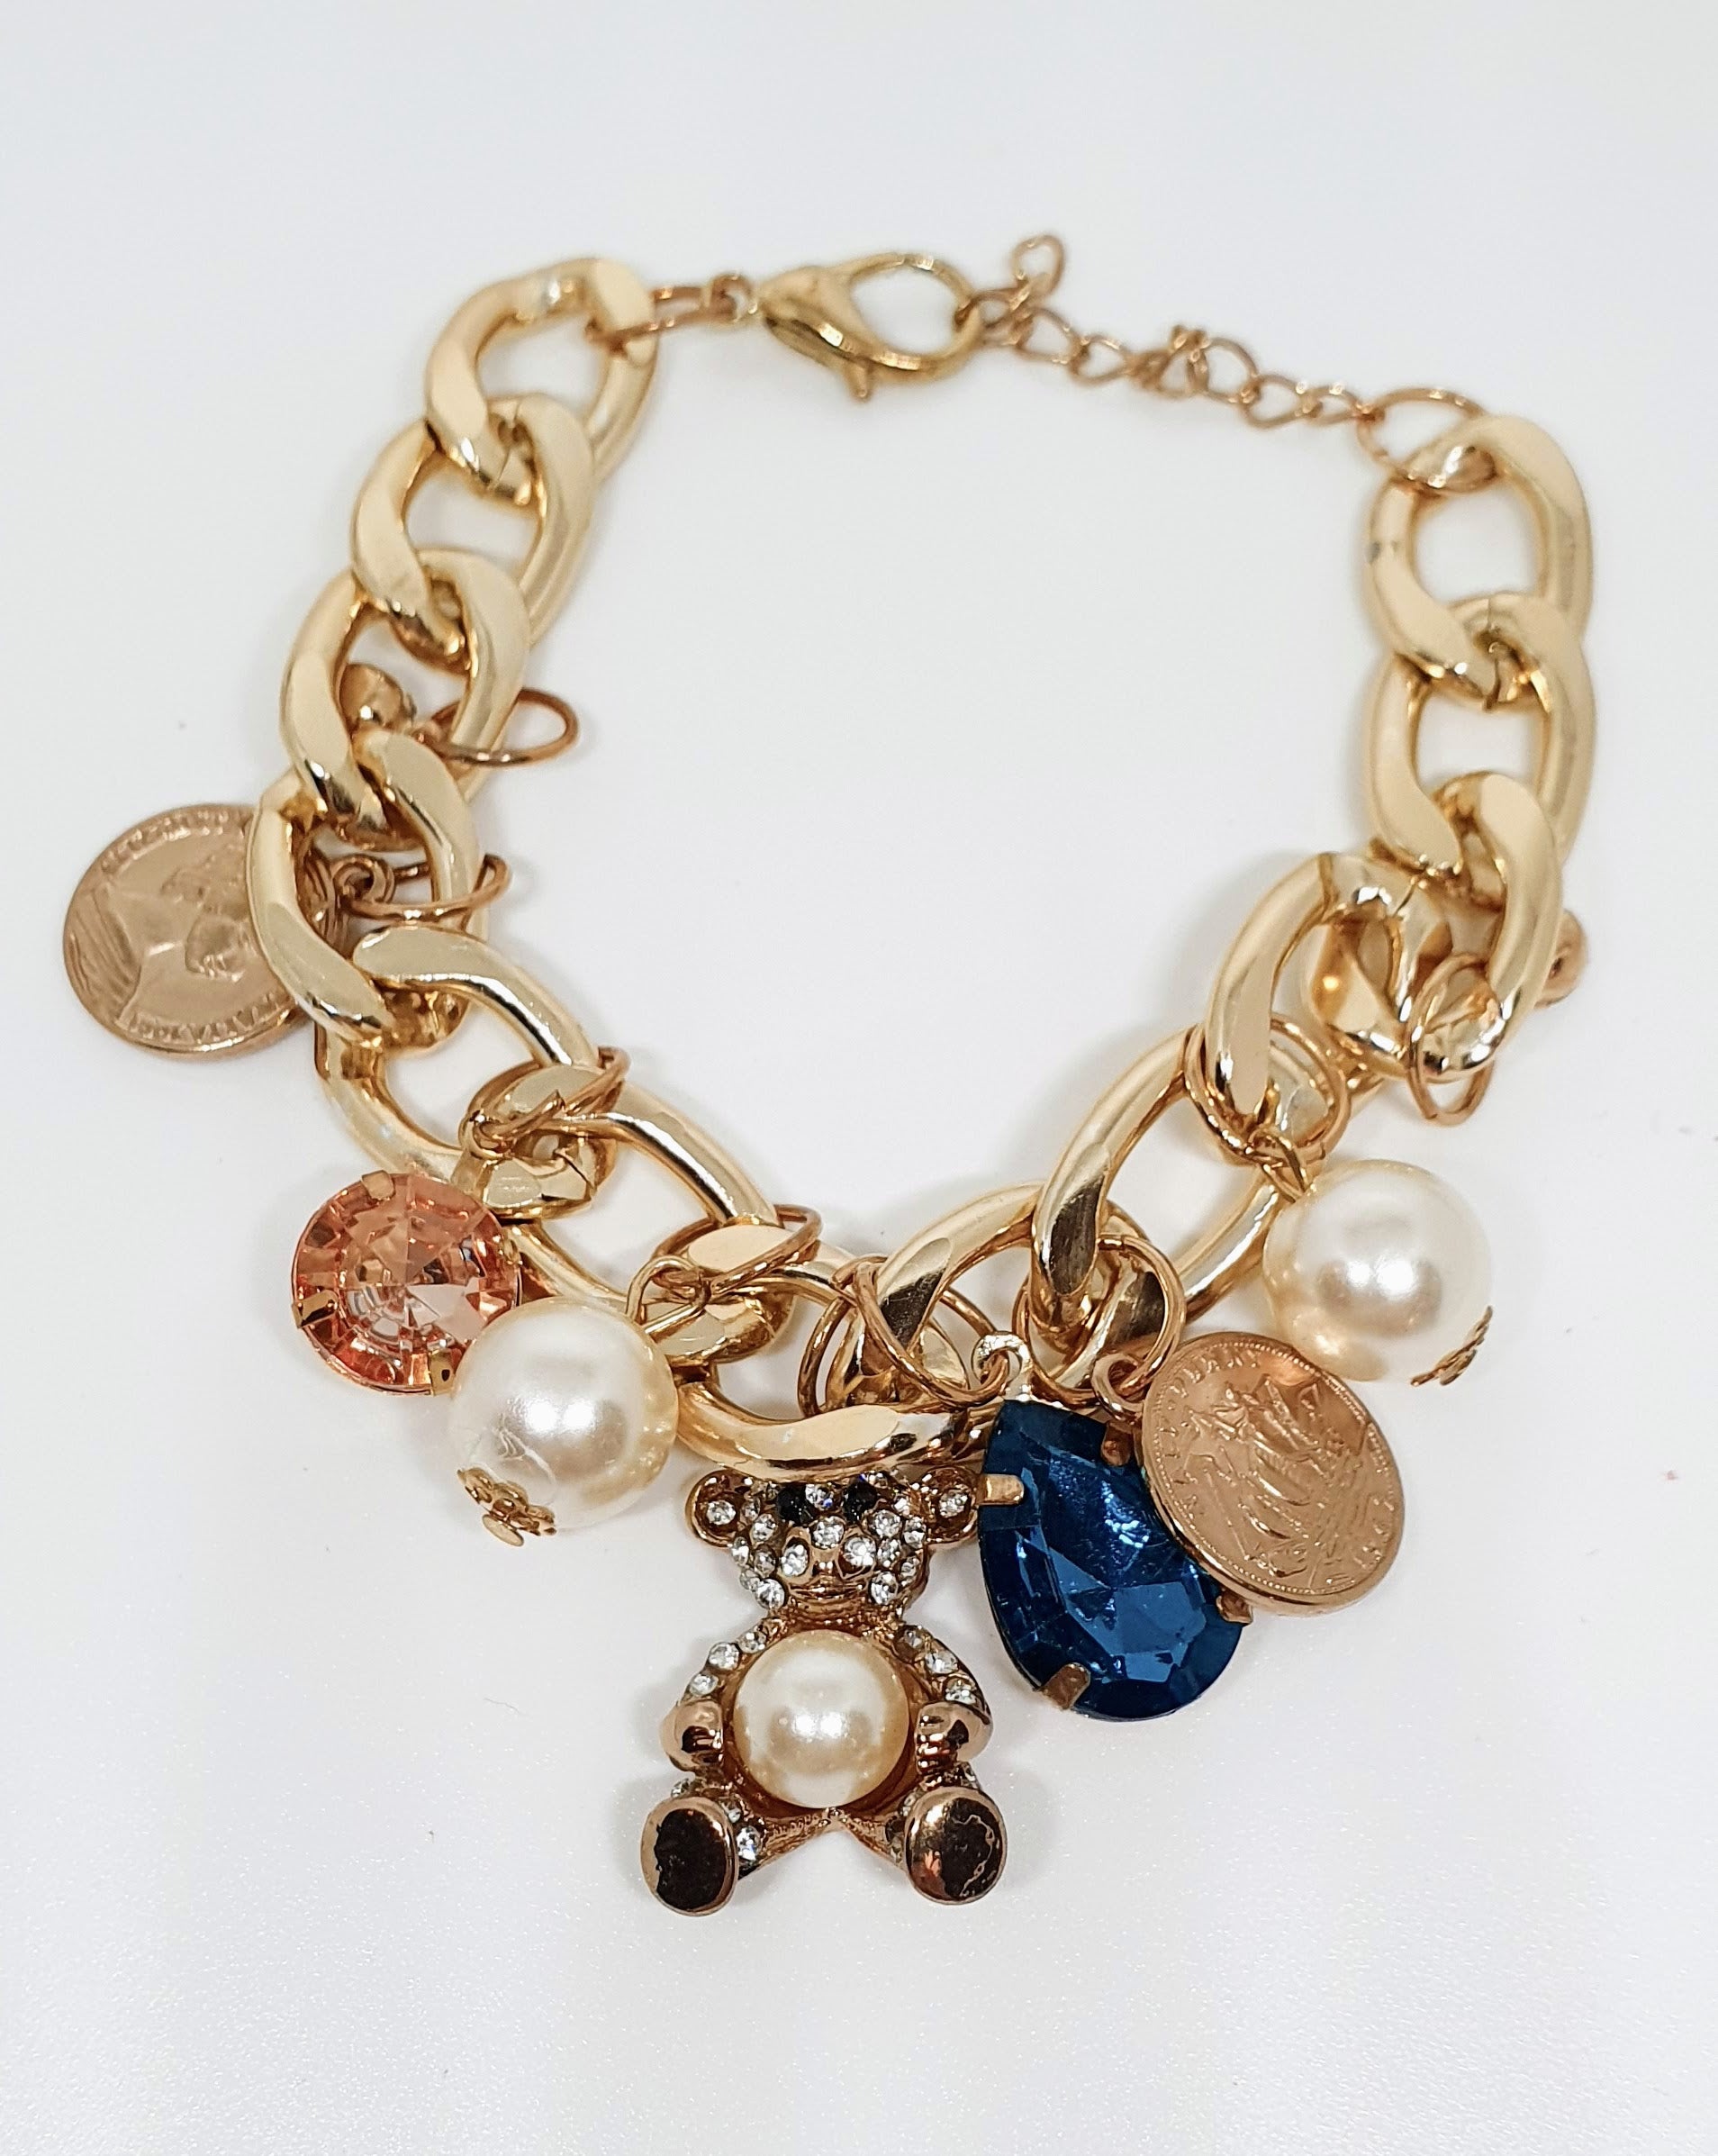 Set of Charm Bracelet with Teddy Bear design & Macaron Bag Charm and Key Chain